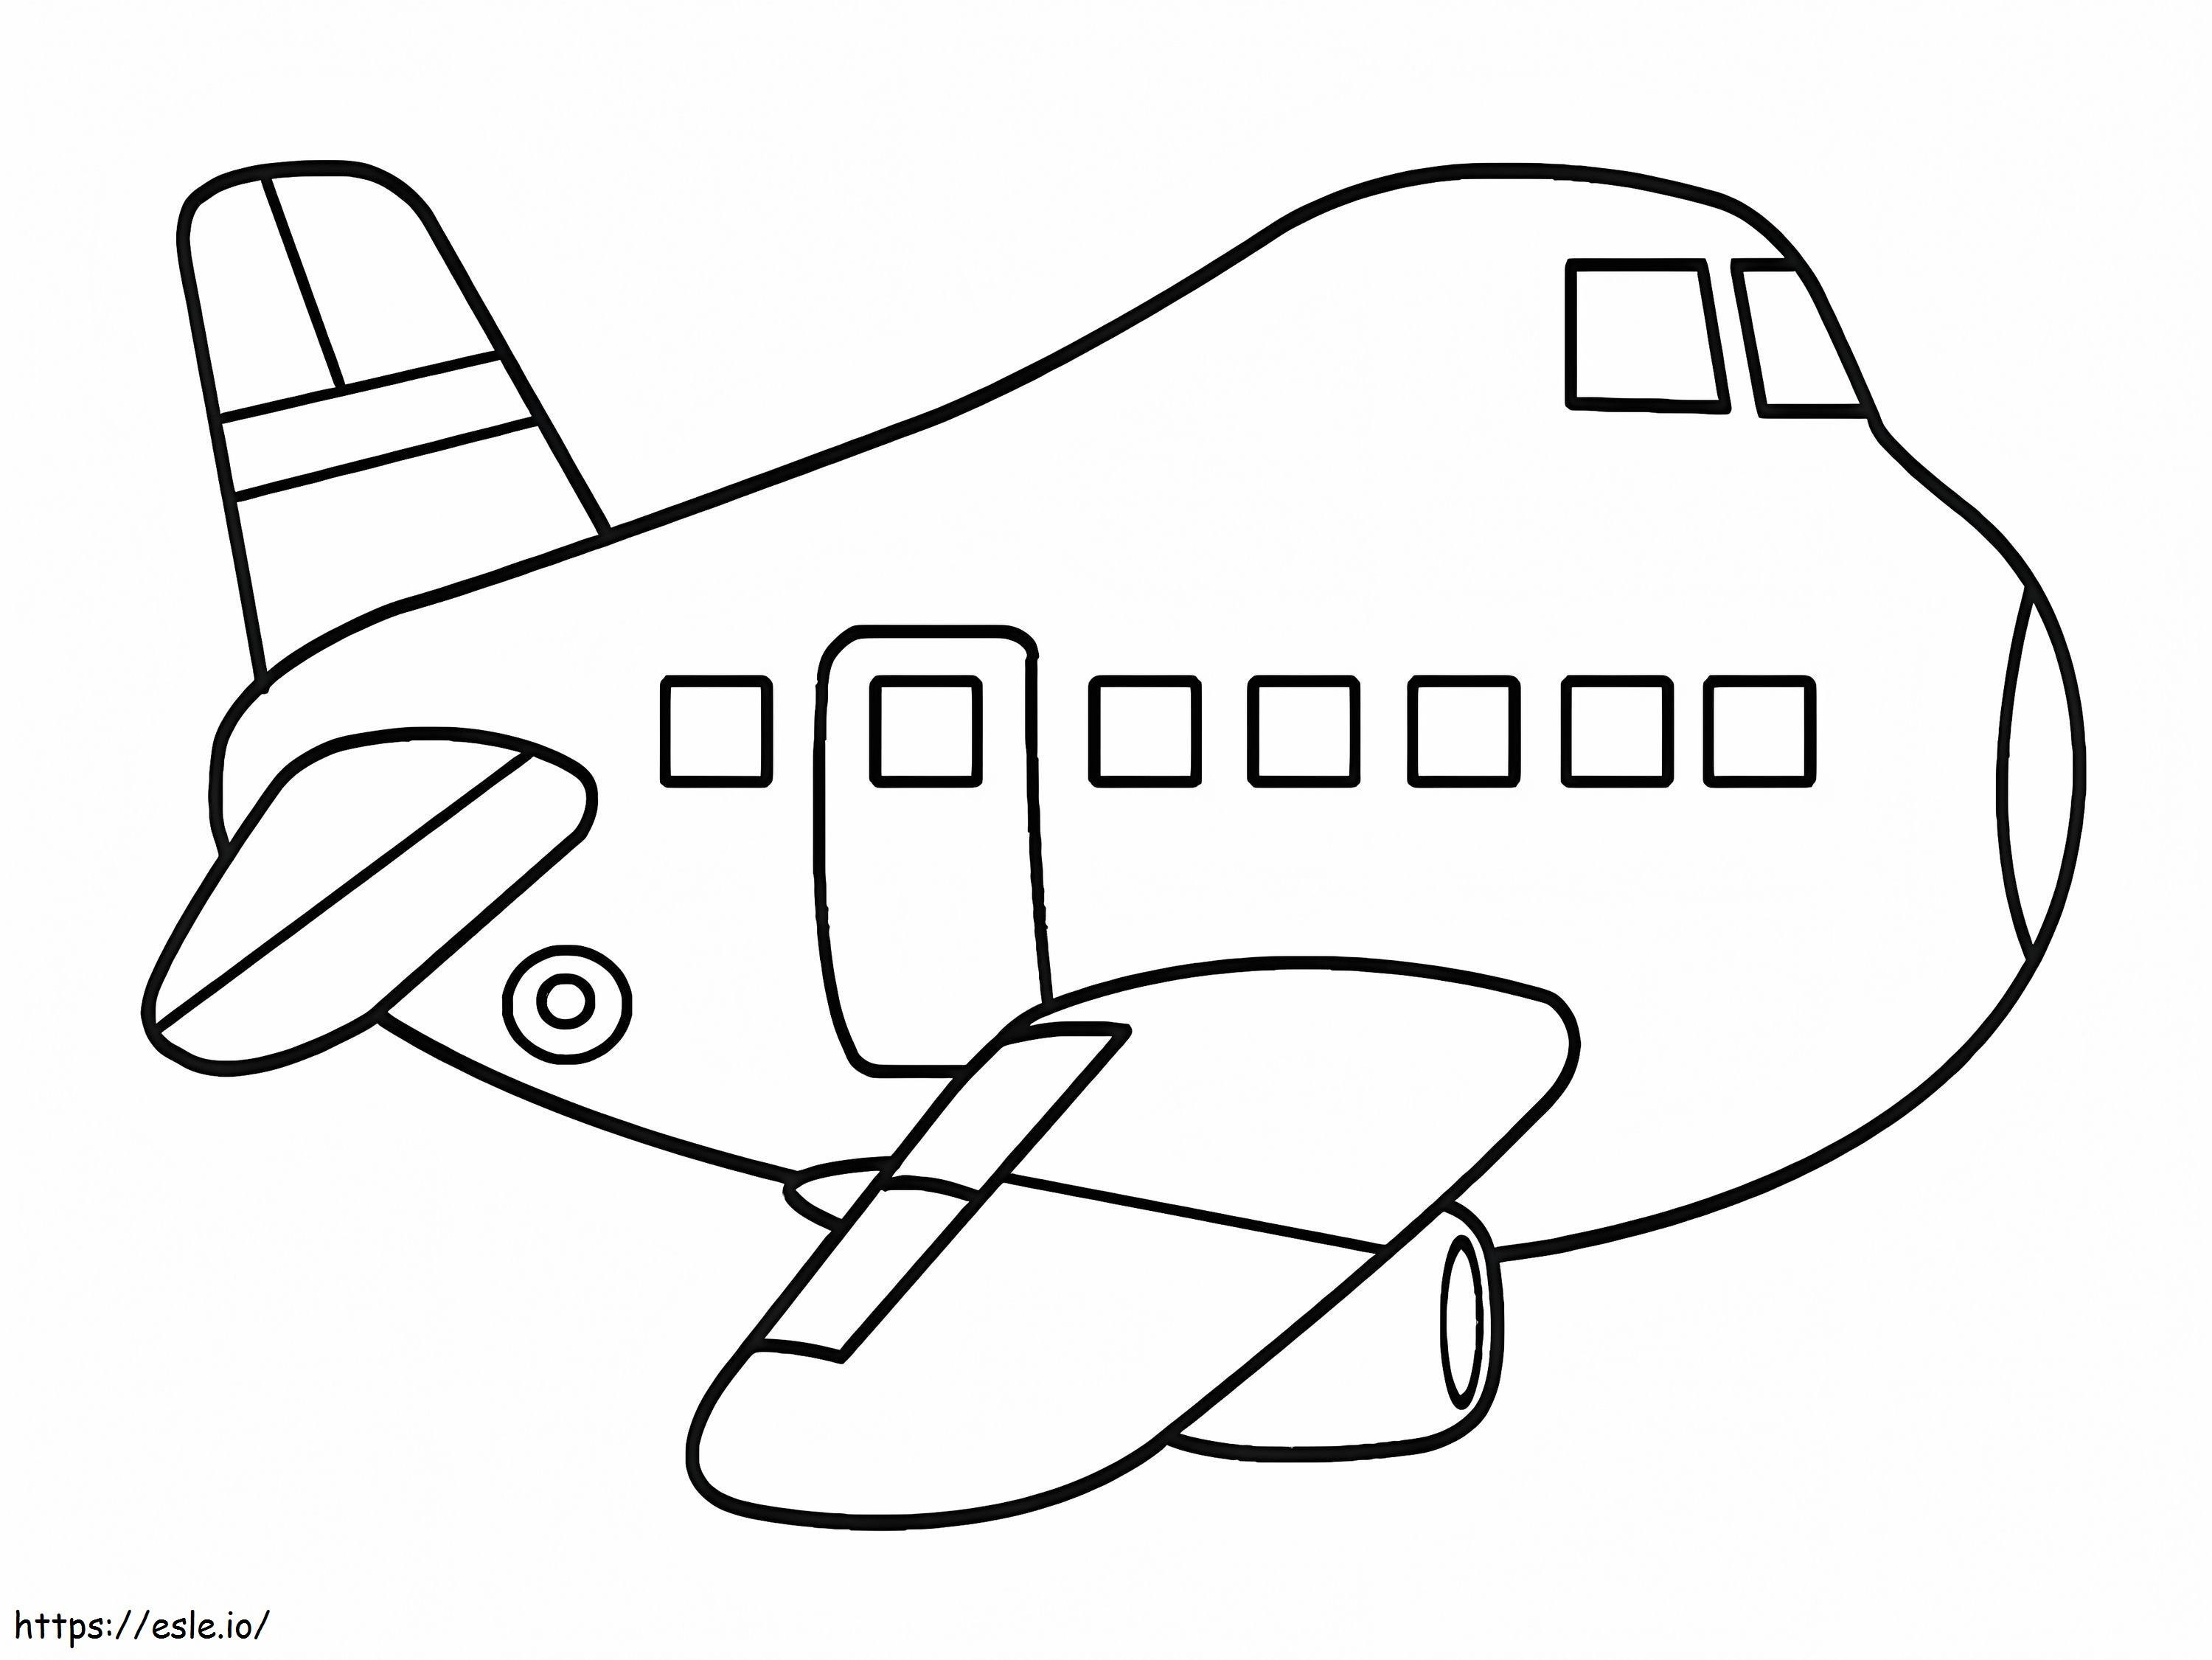 Aeroplane 3 coloring page